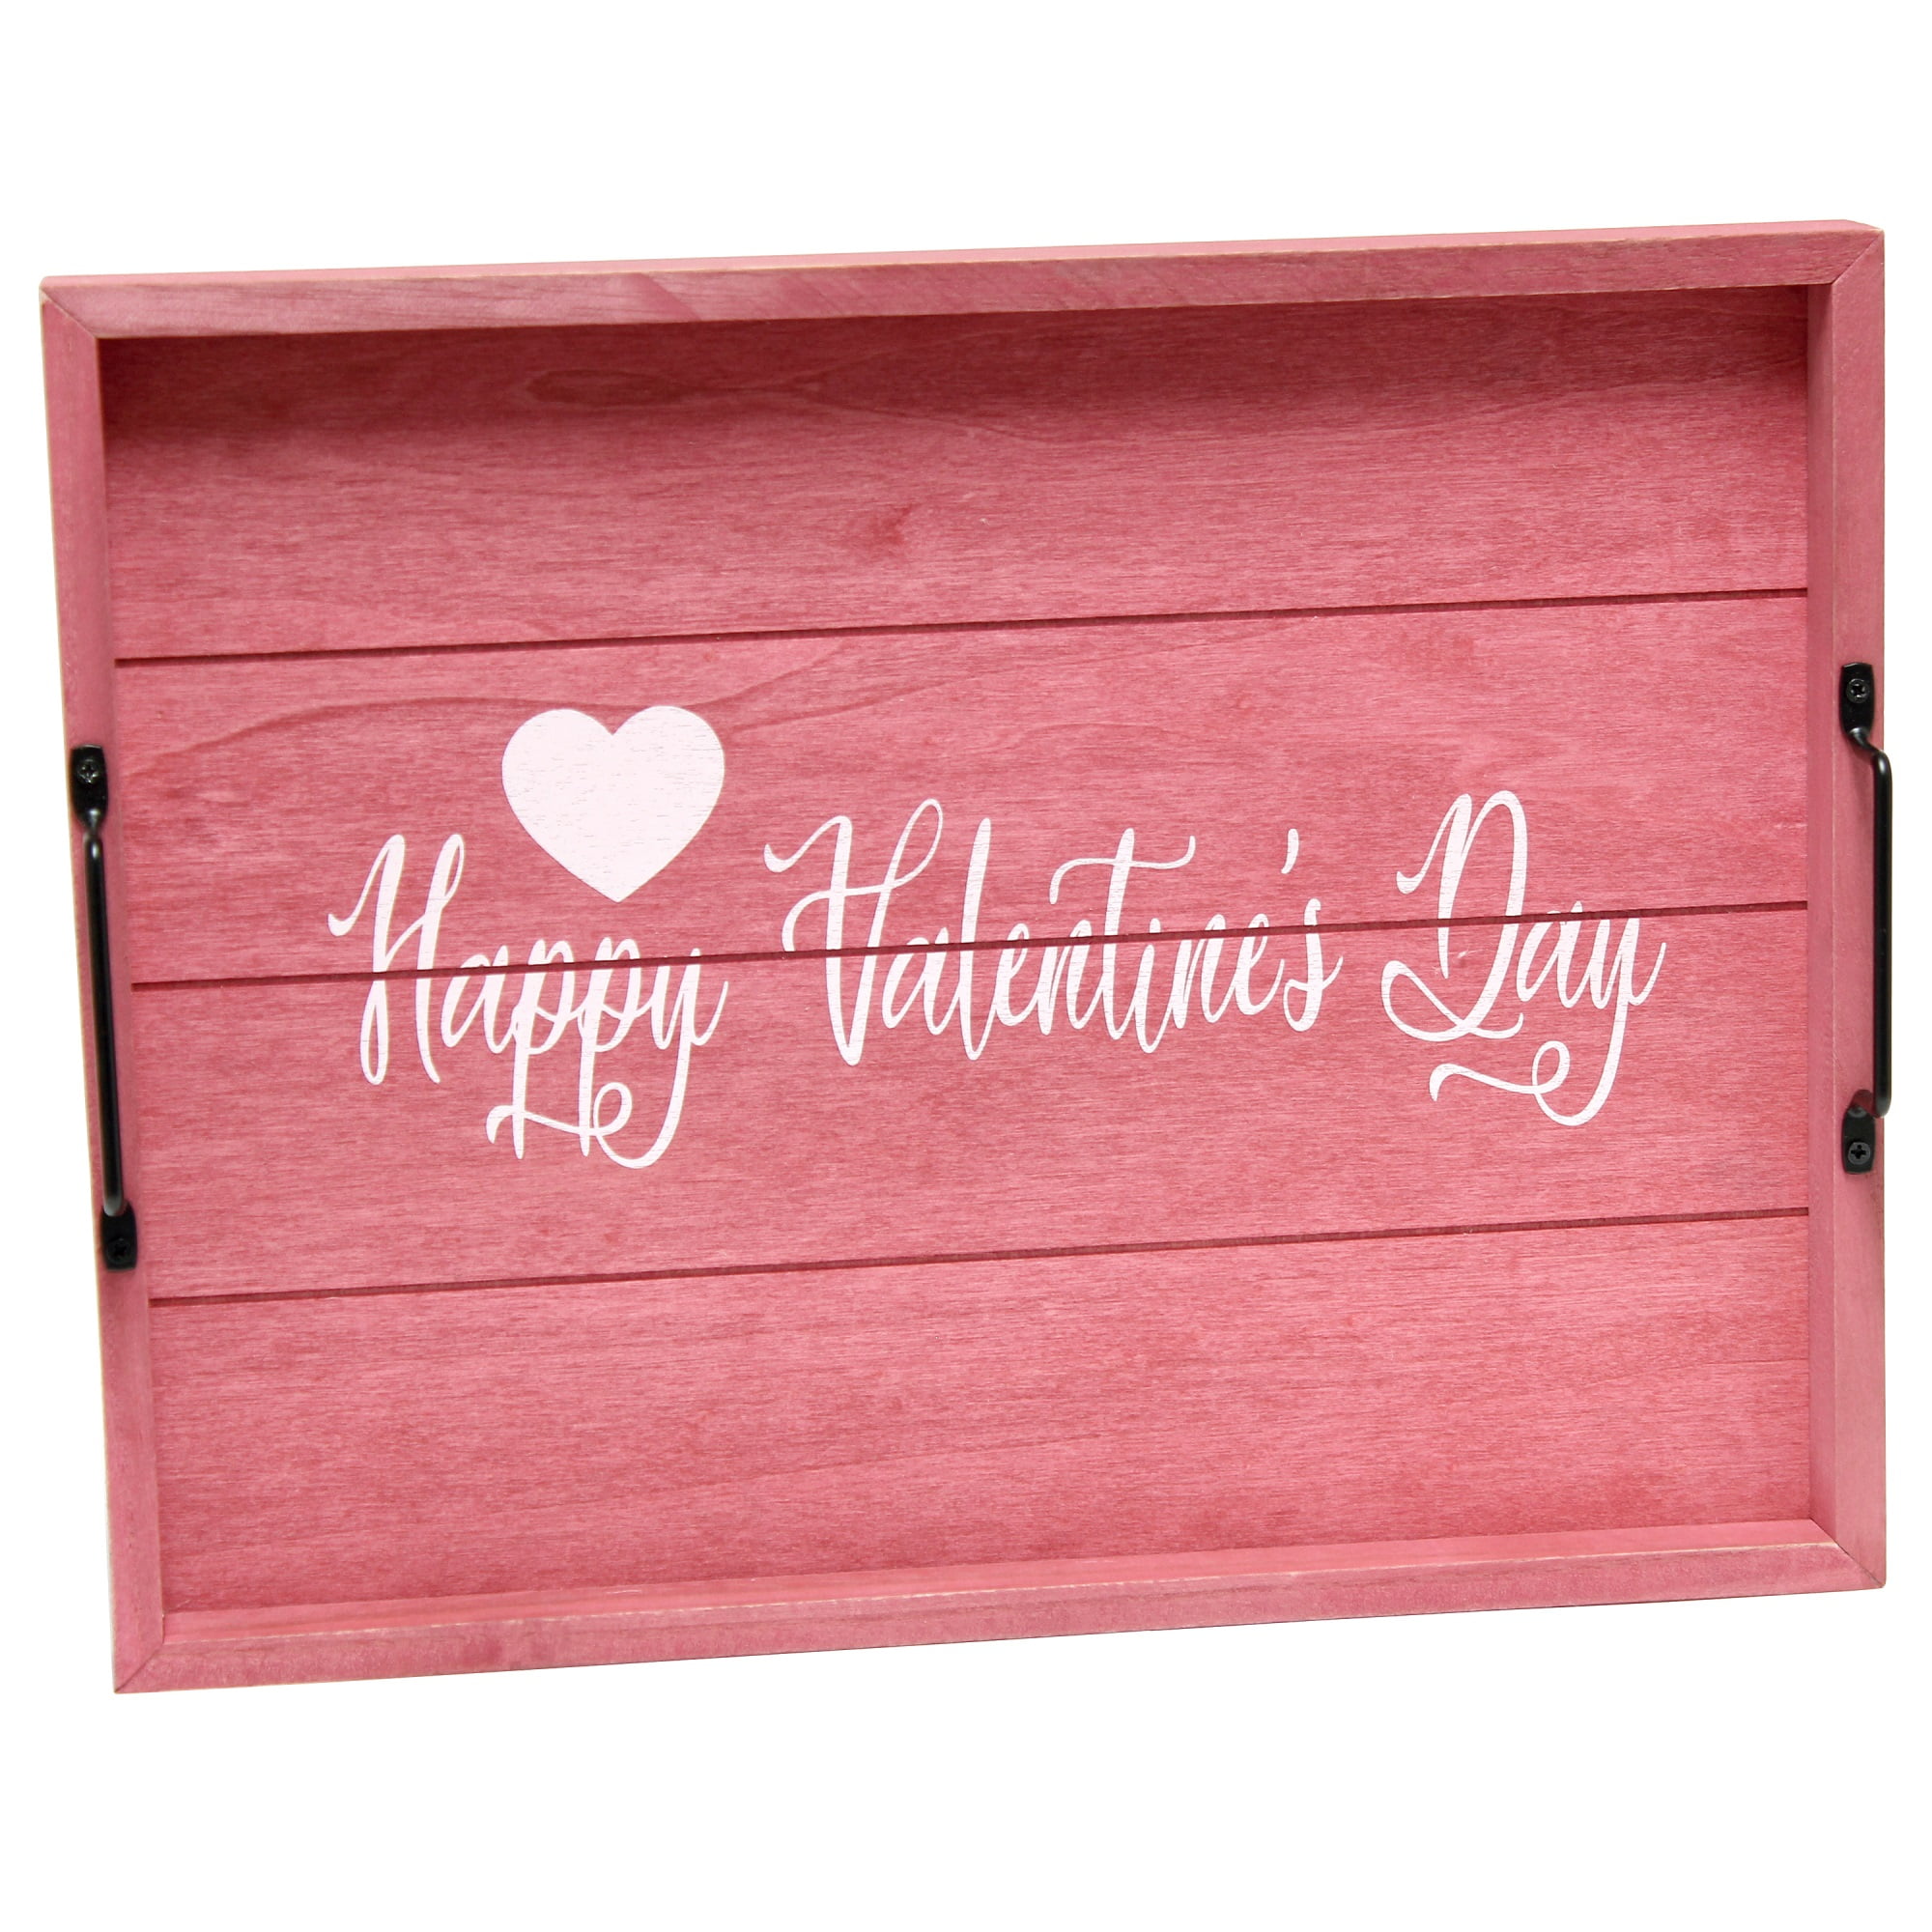 Elegant Designs Decorative Wood Serving Tray w/ Handles, 15.50" x 12", "Happy Valentine's Day"